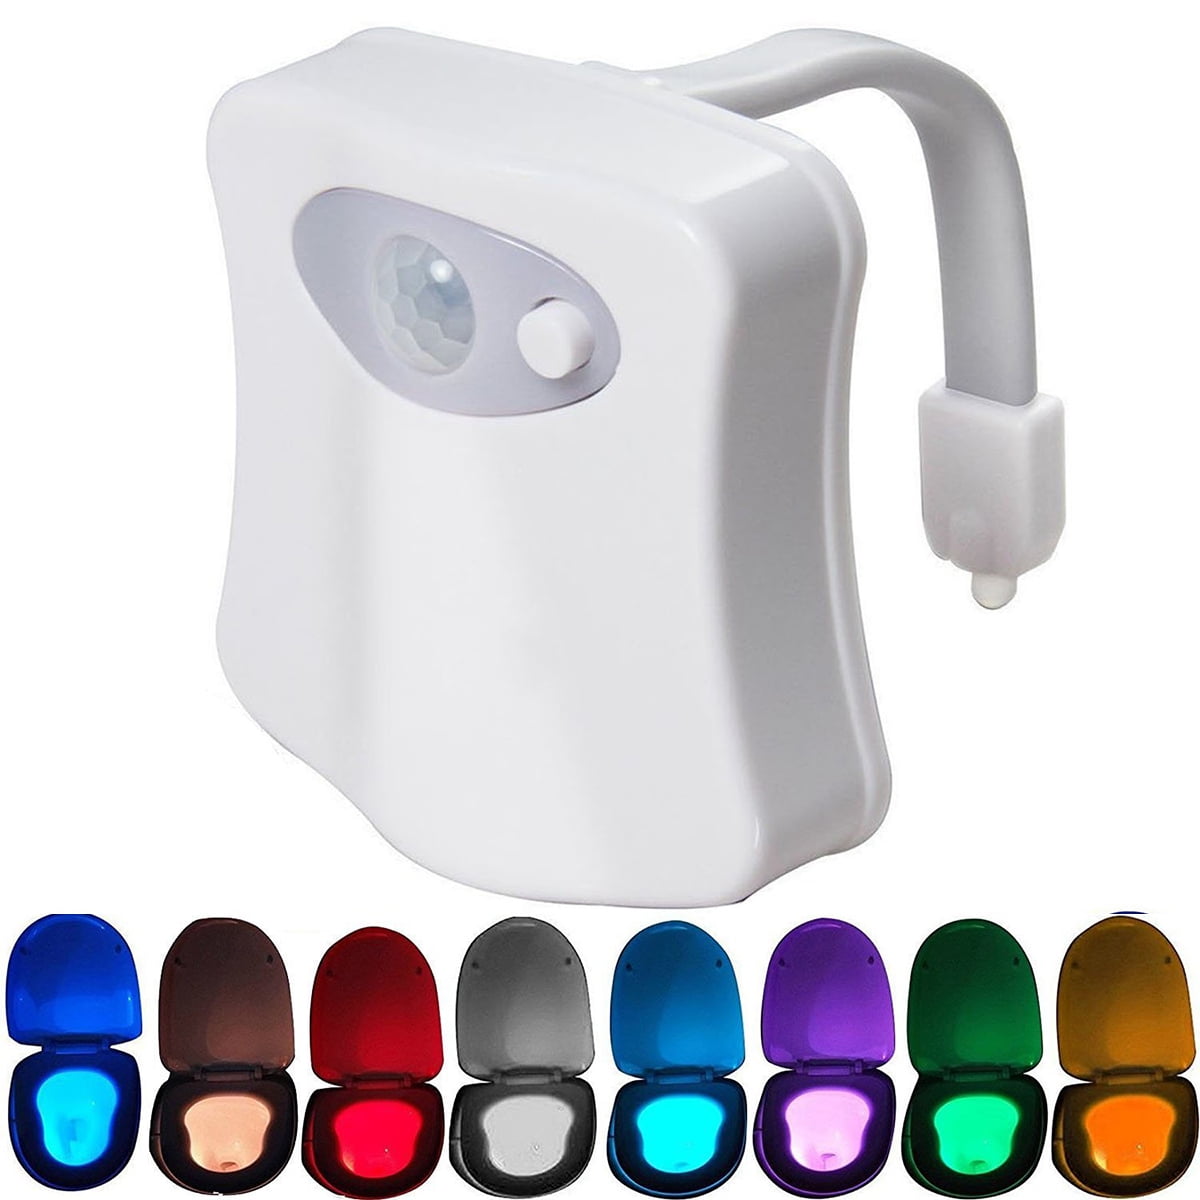 Details about   8 Color Toilet Night Light LED Motion Activated Sensor Bathroom Bowl Seat Lamp 